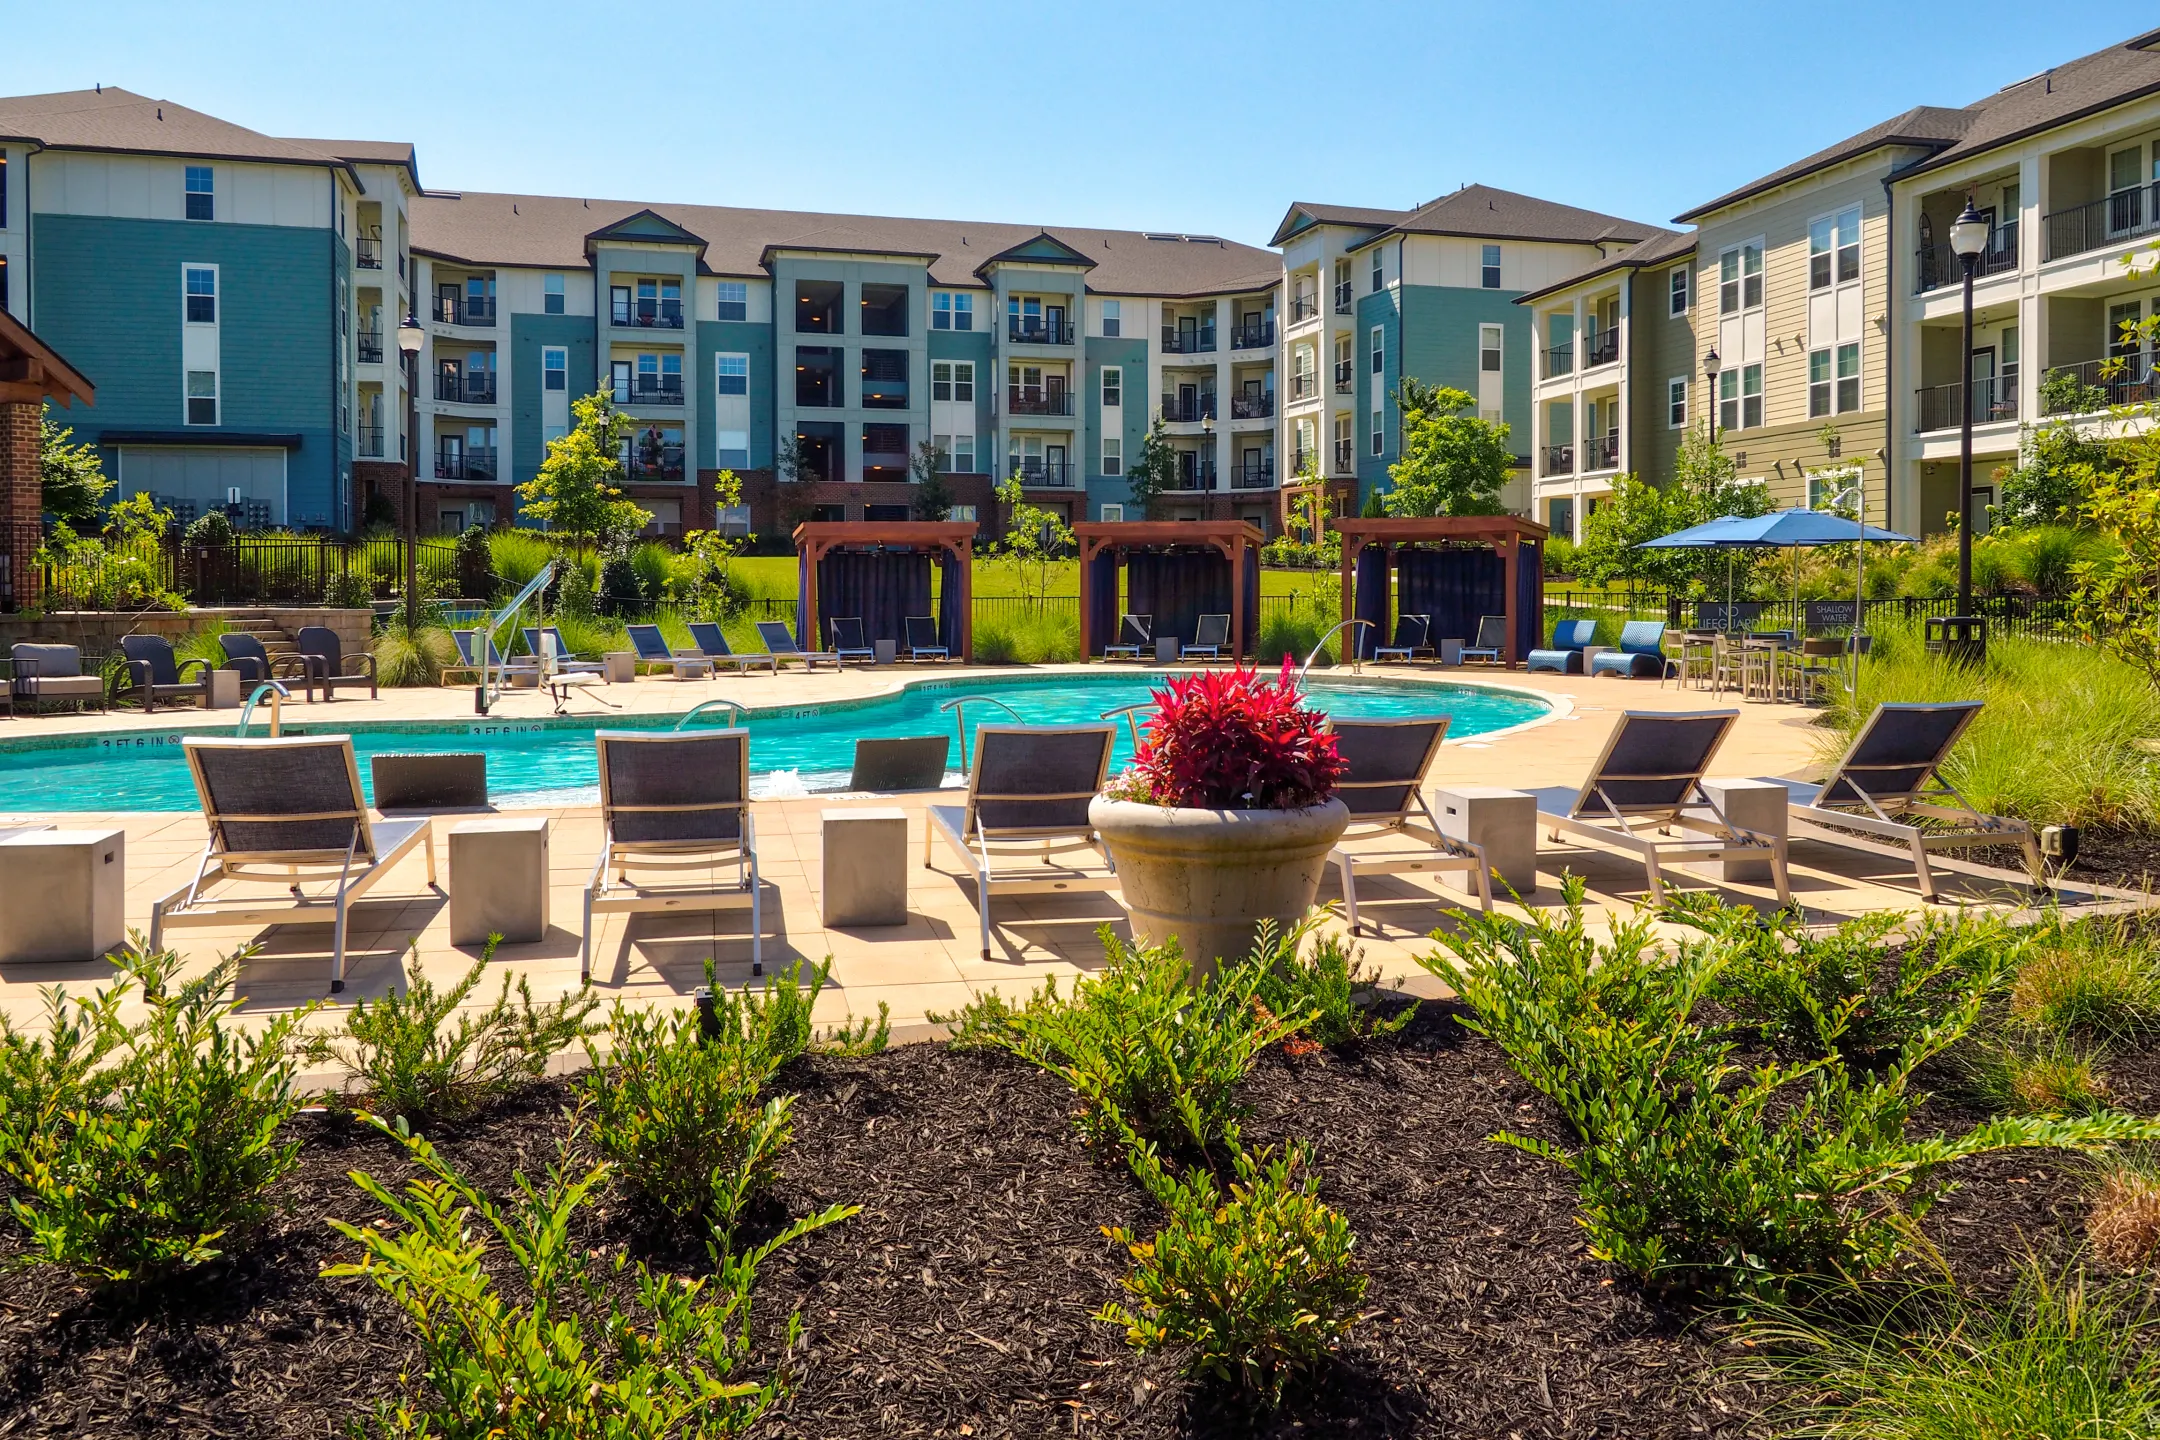 Pool - Trailside Verdae Apartments - Greenville, SC